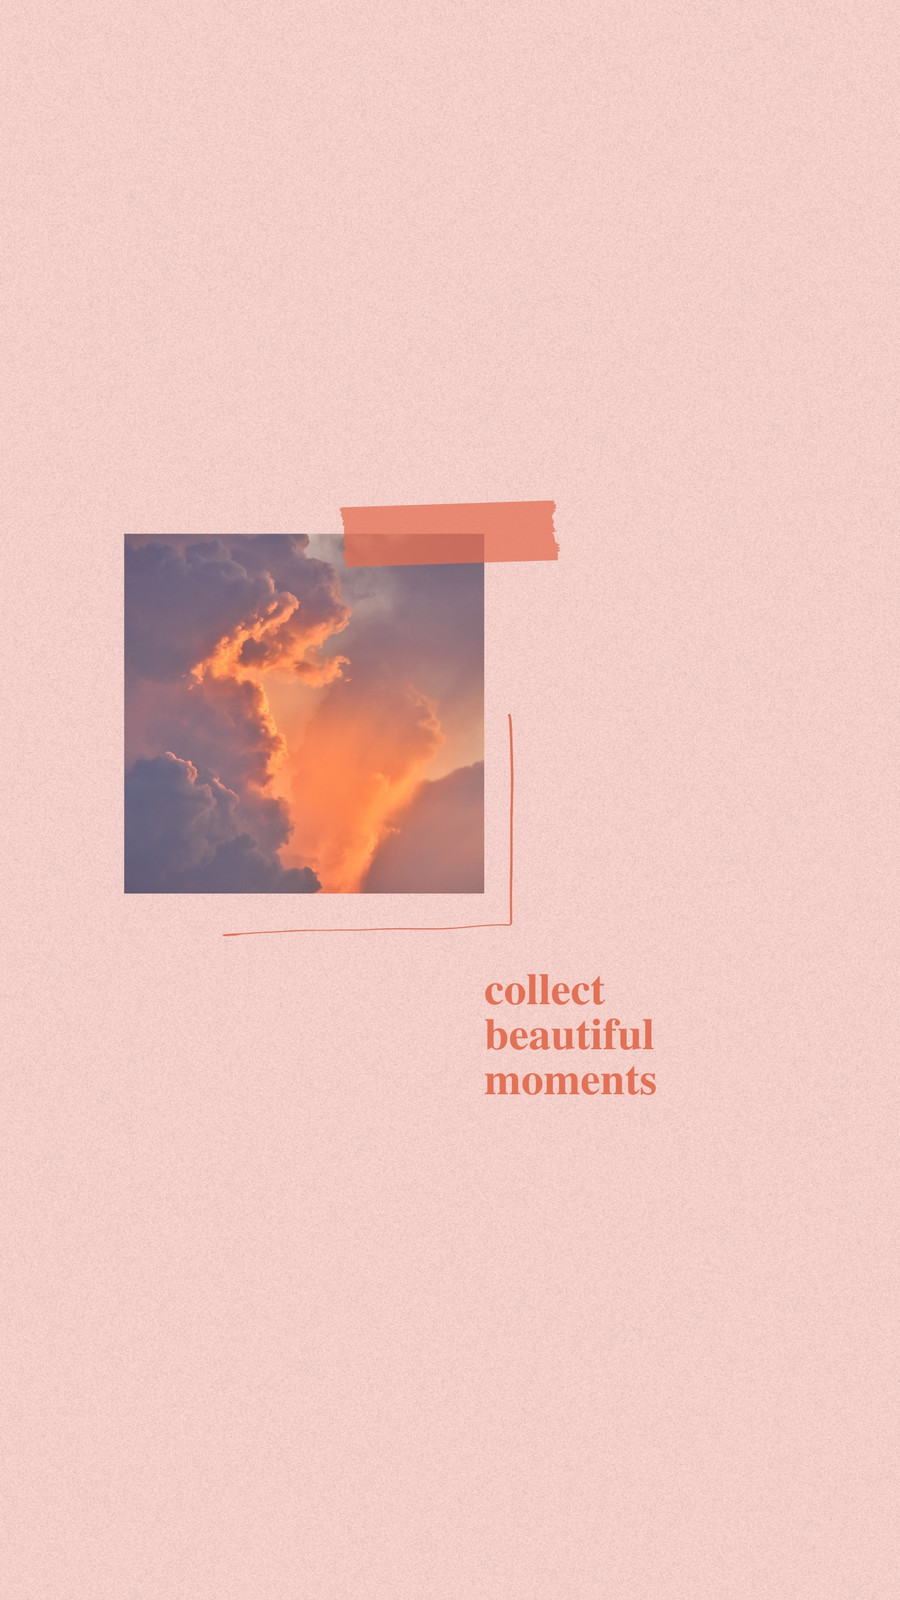 Collect beautiful moments - Orange